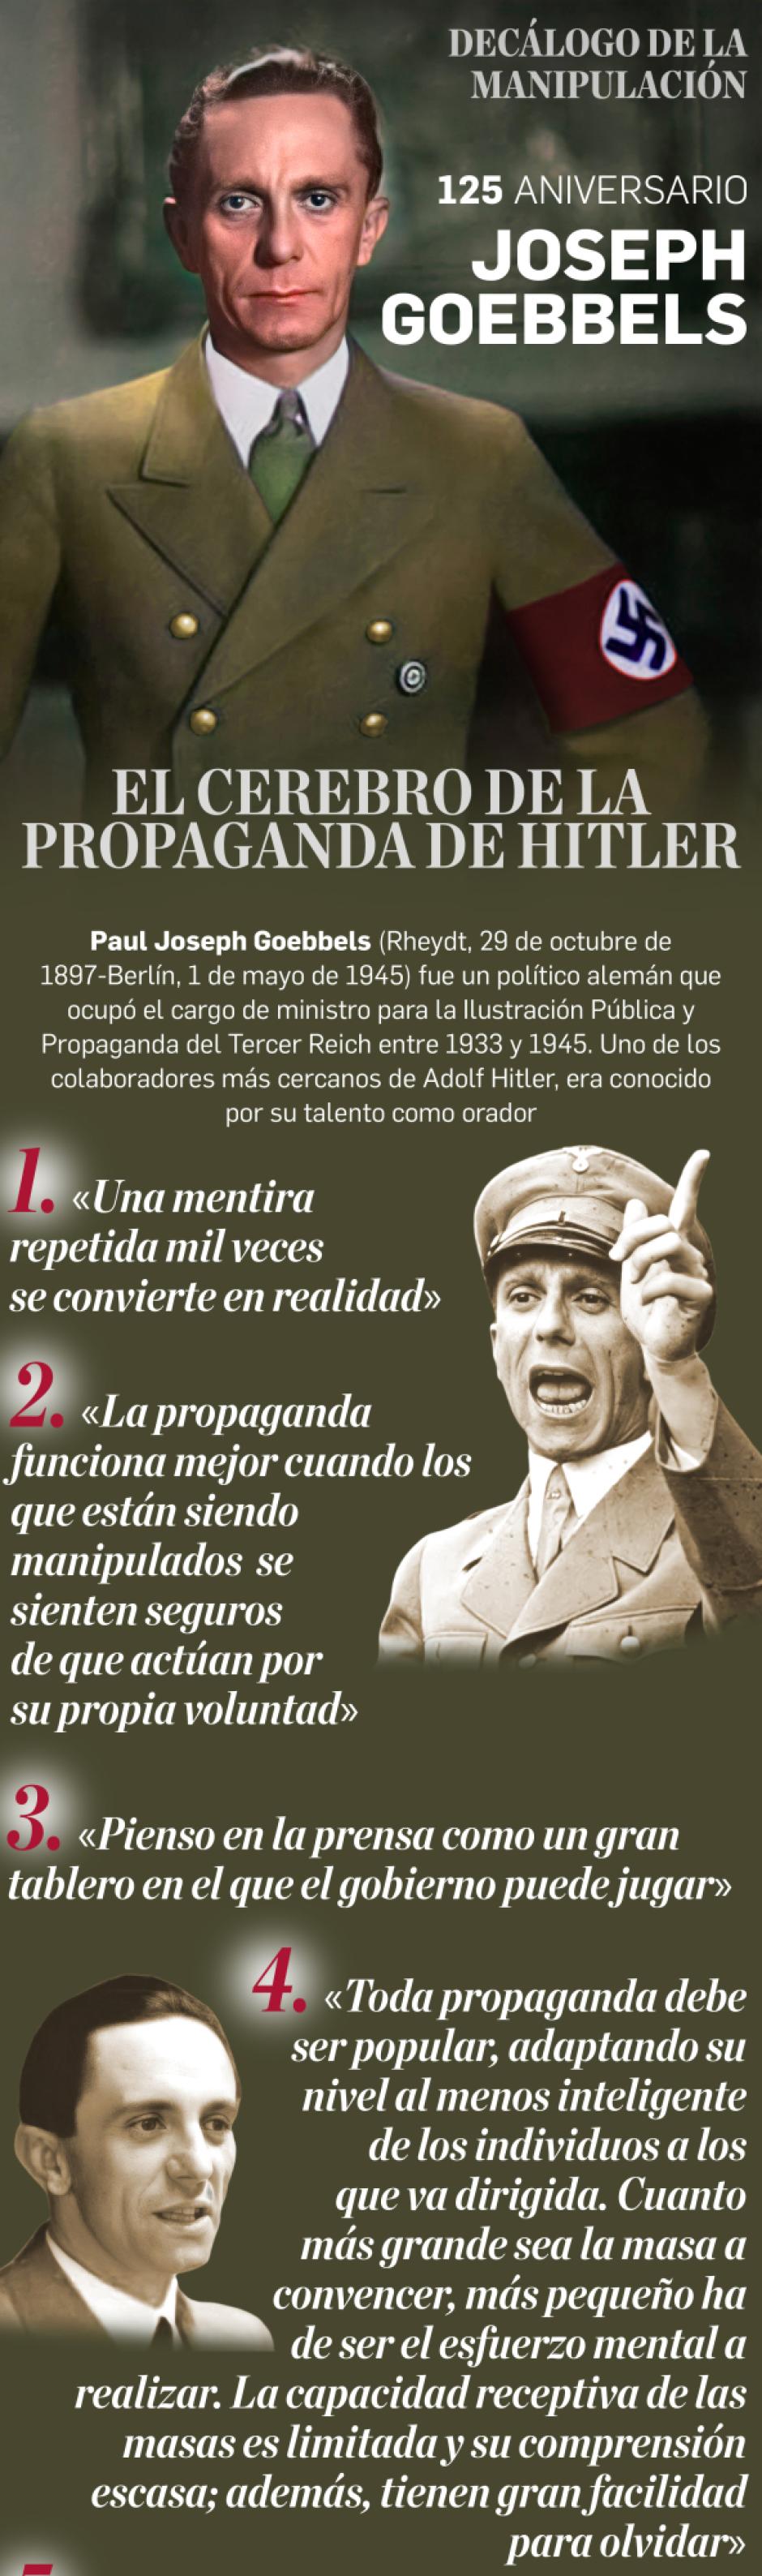 Joseph Goebbels, ministro de propaganda nazi